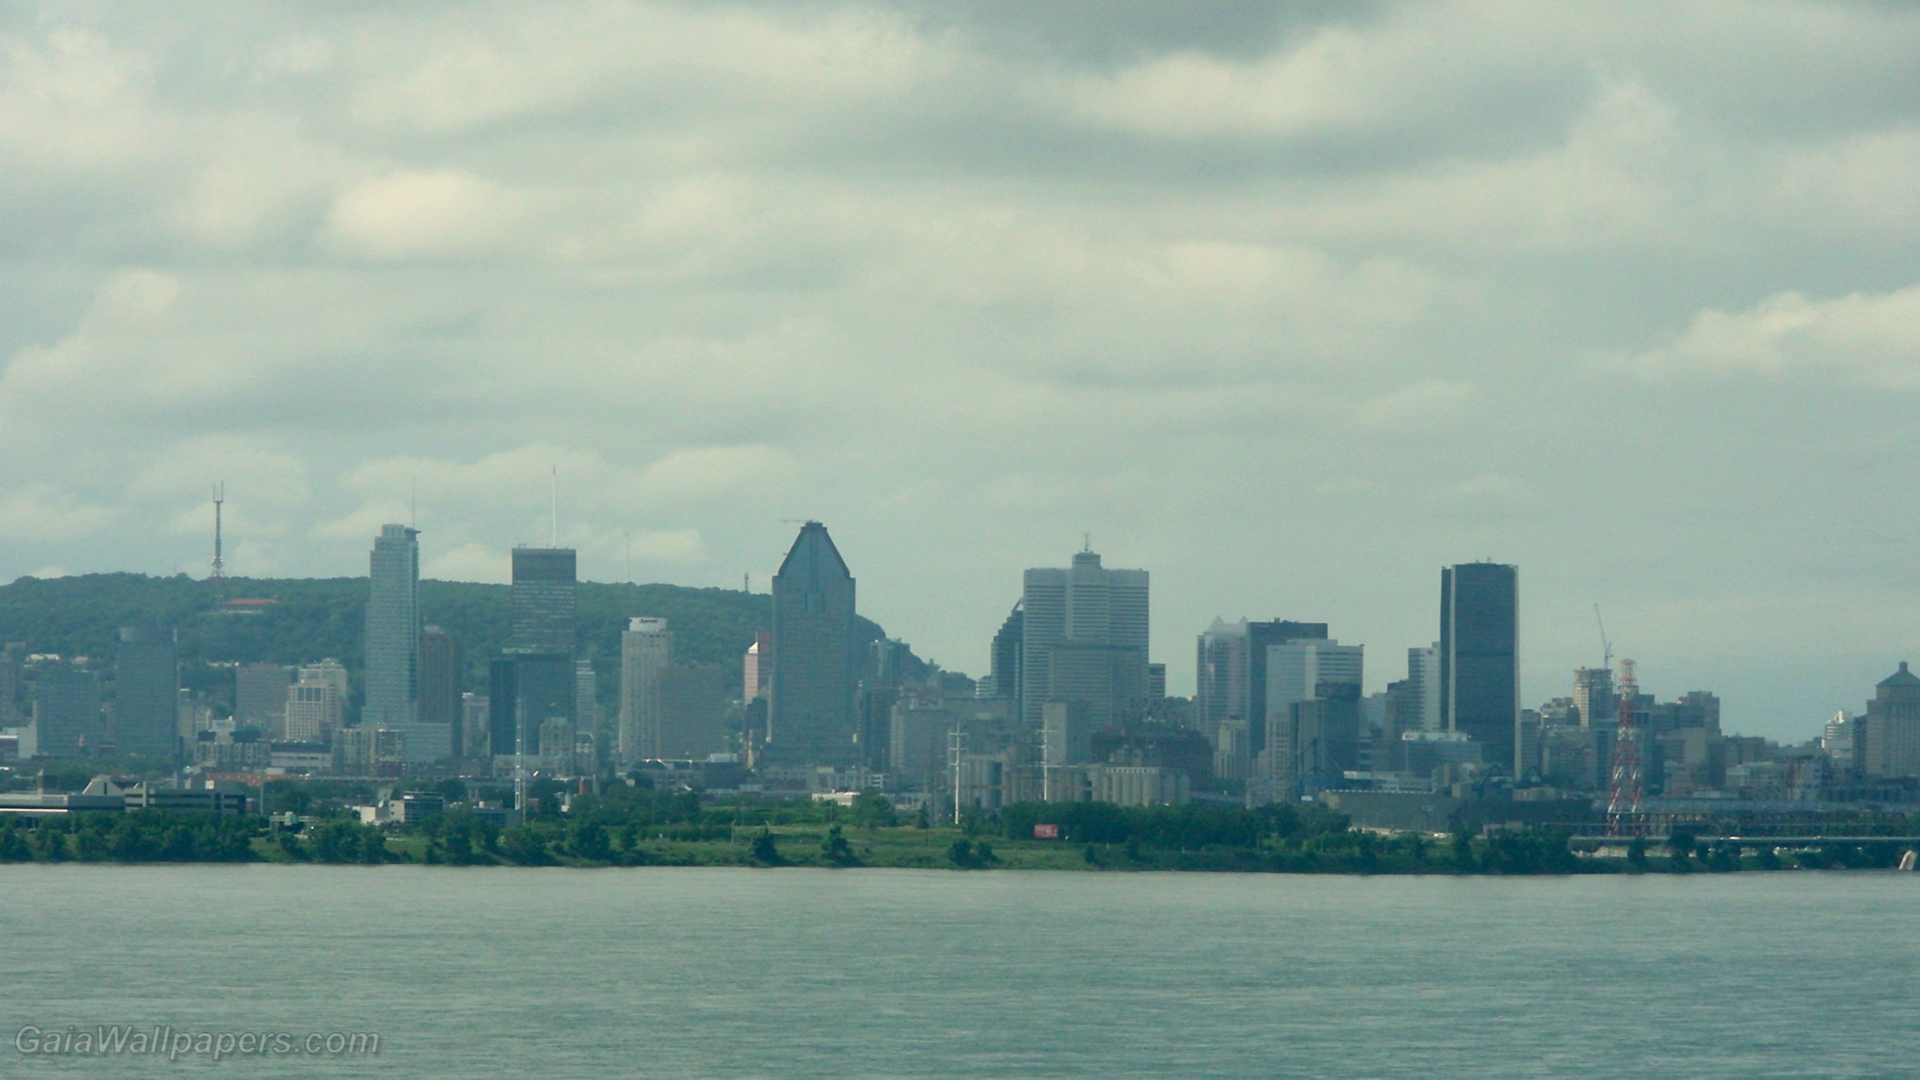 Montreal seen from Champlain Bridge - Free desktop wallpapers